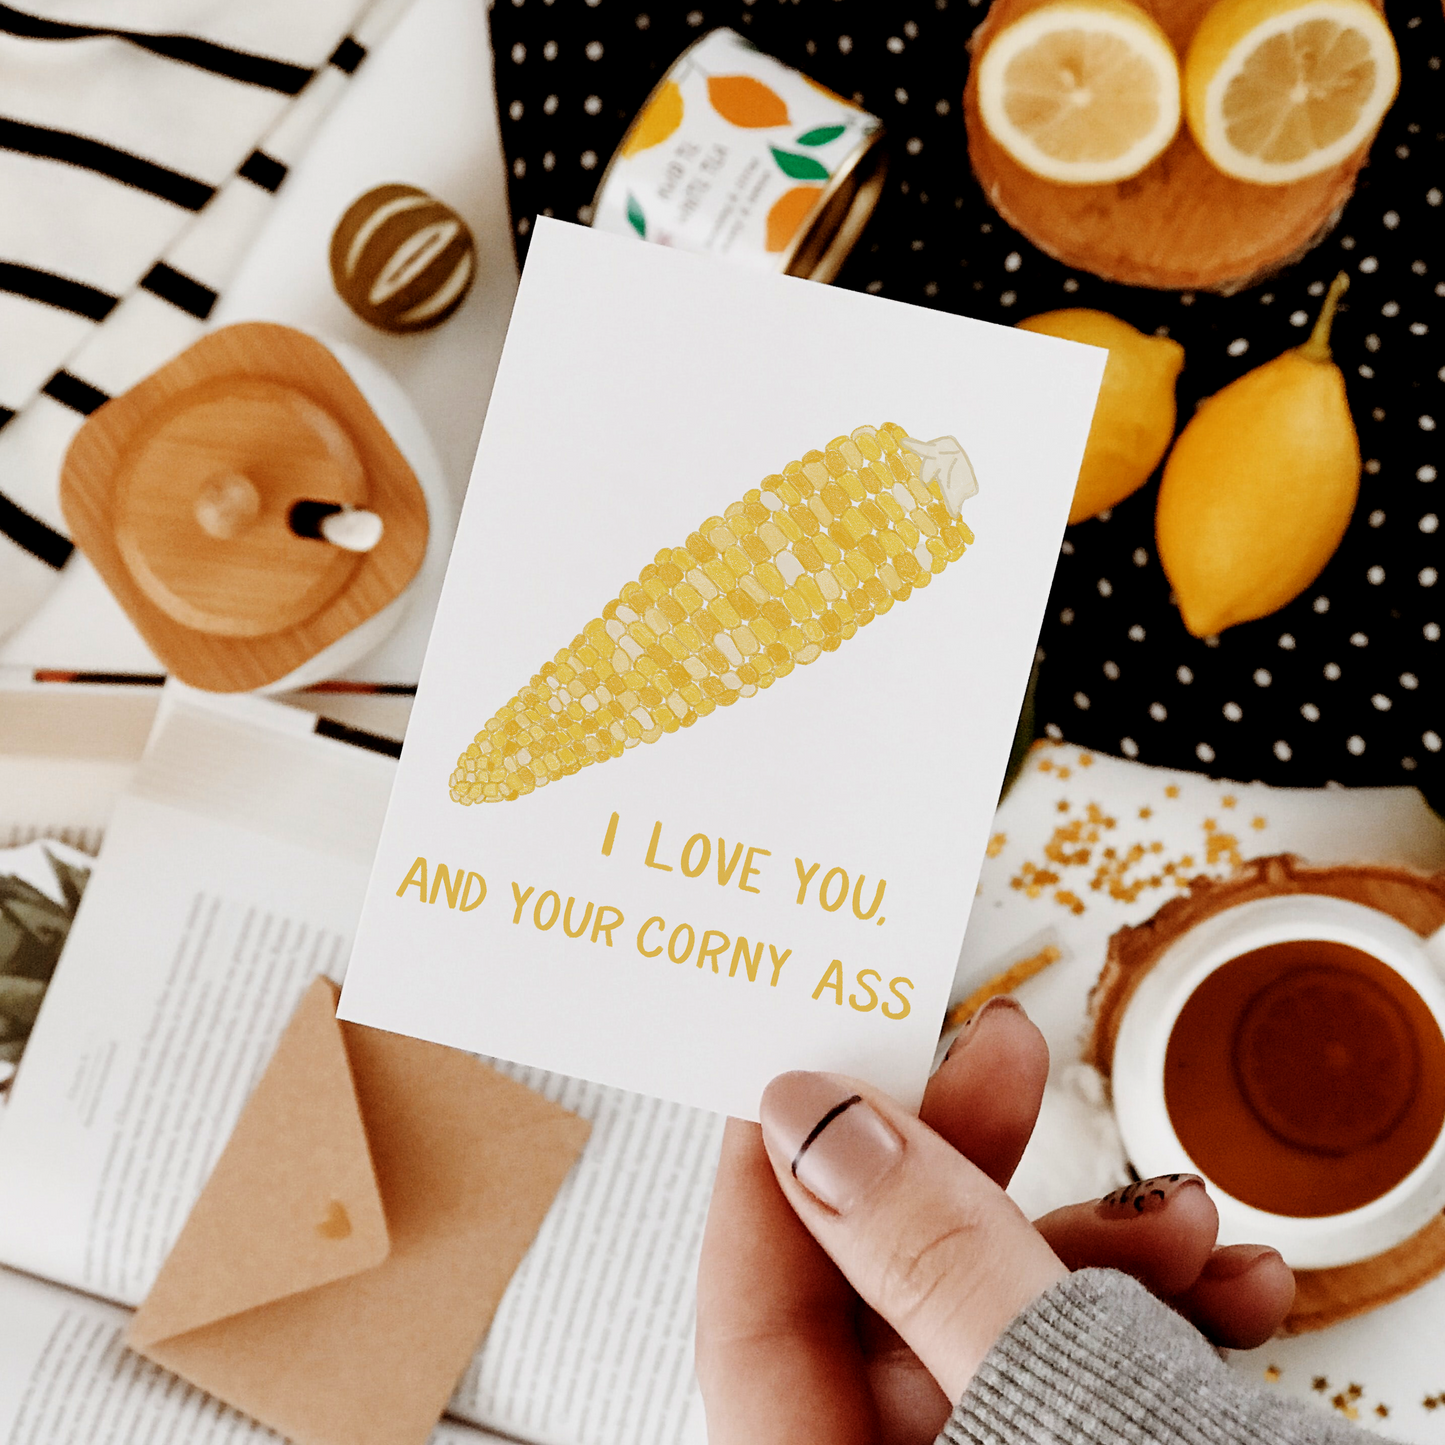 Corny Love Greeting Card